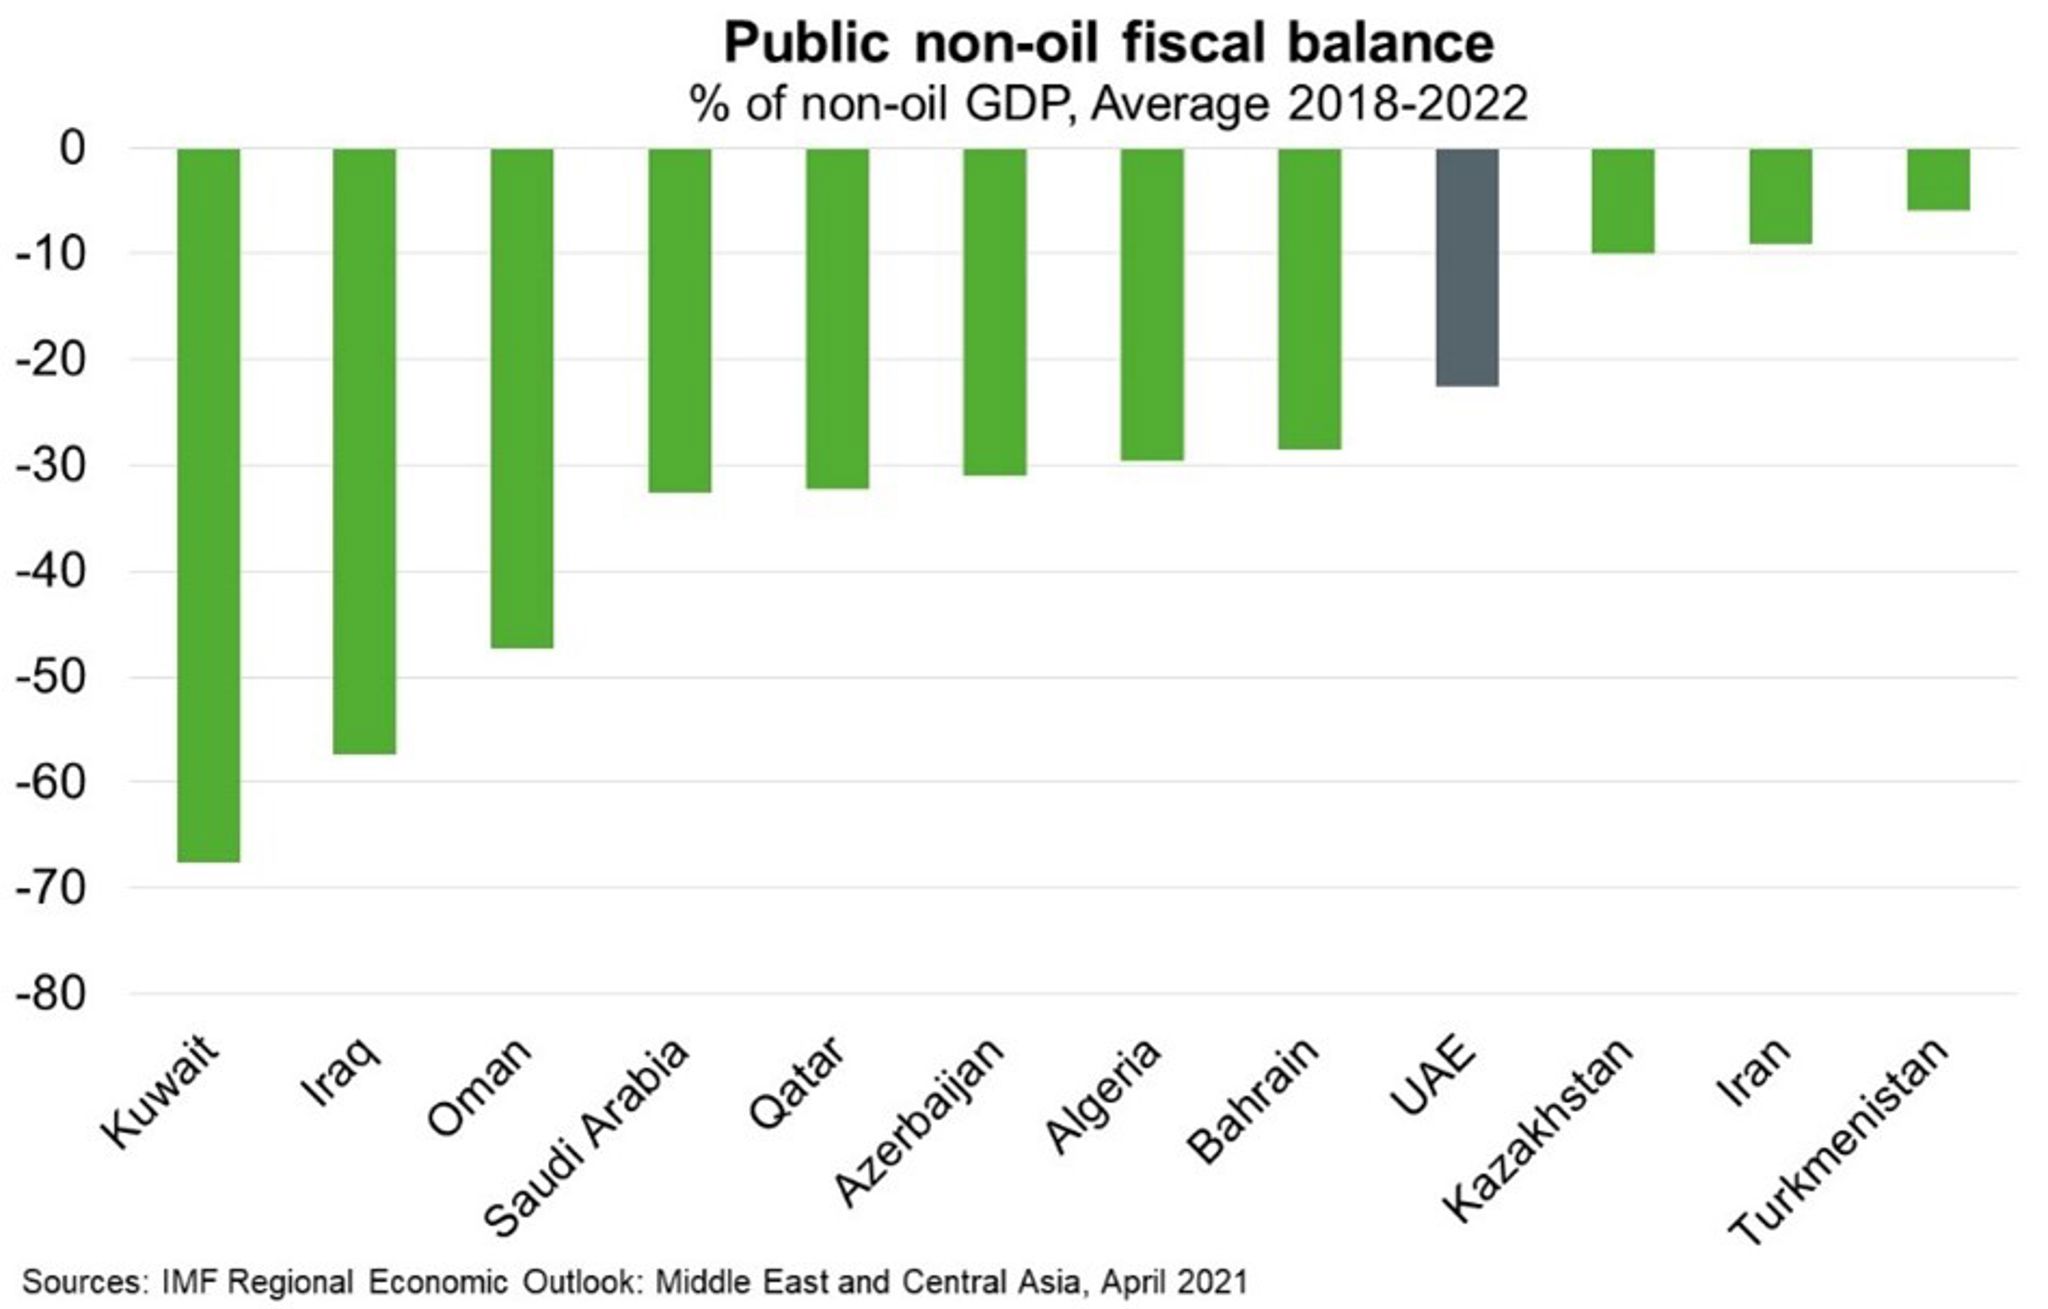 Public non-oil fiscal balance